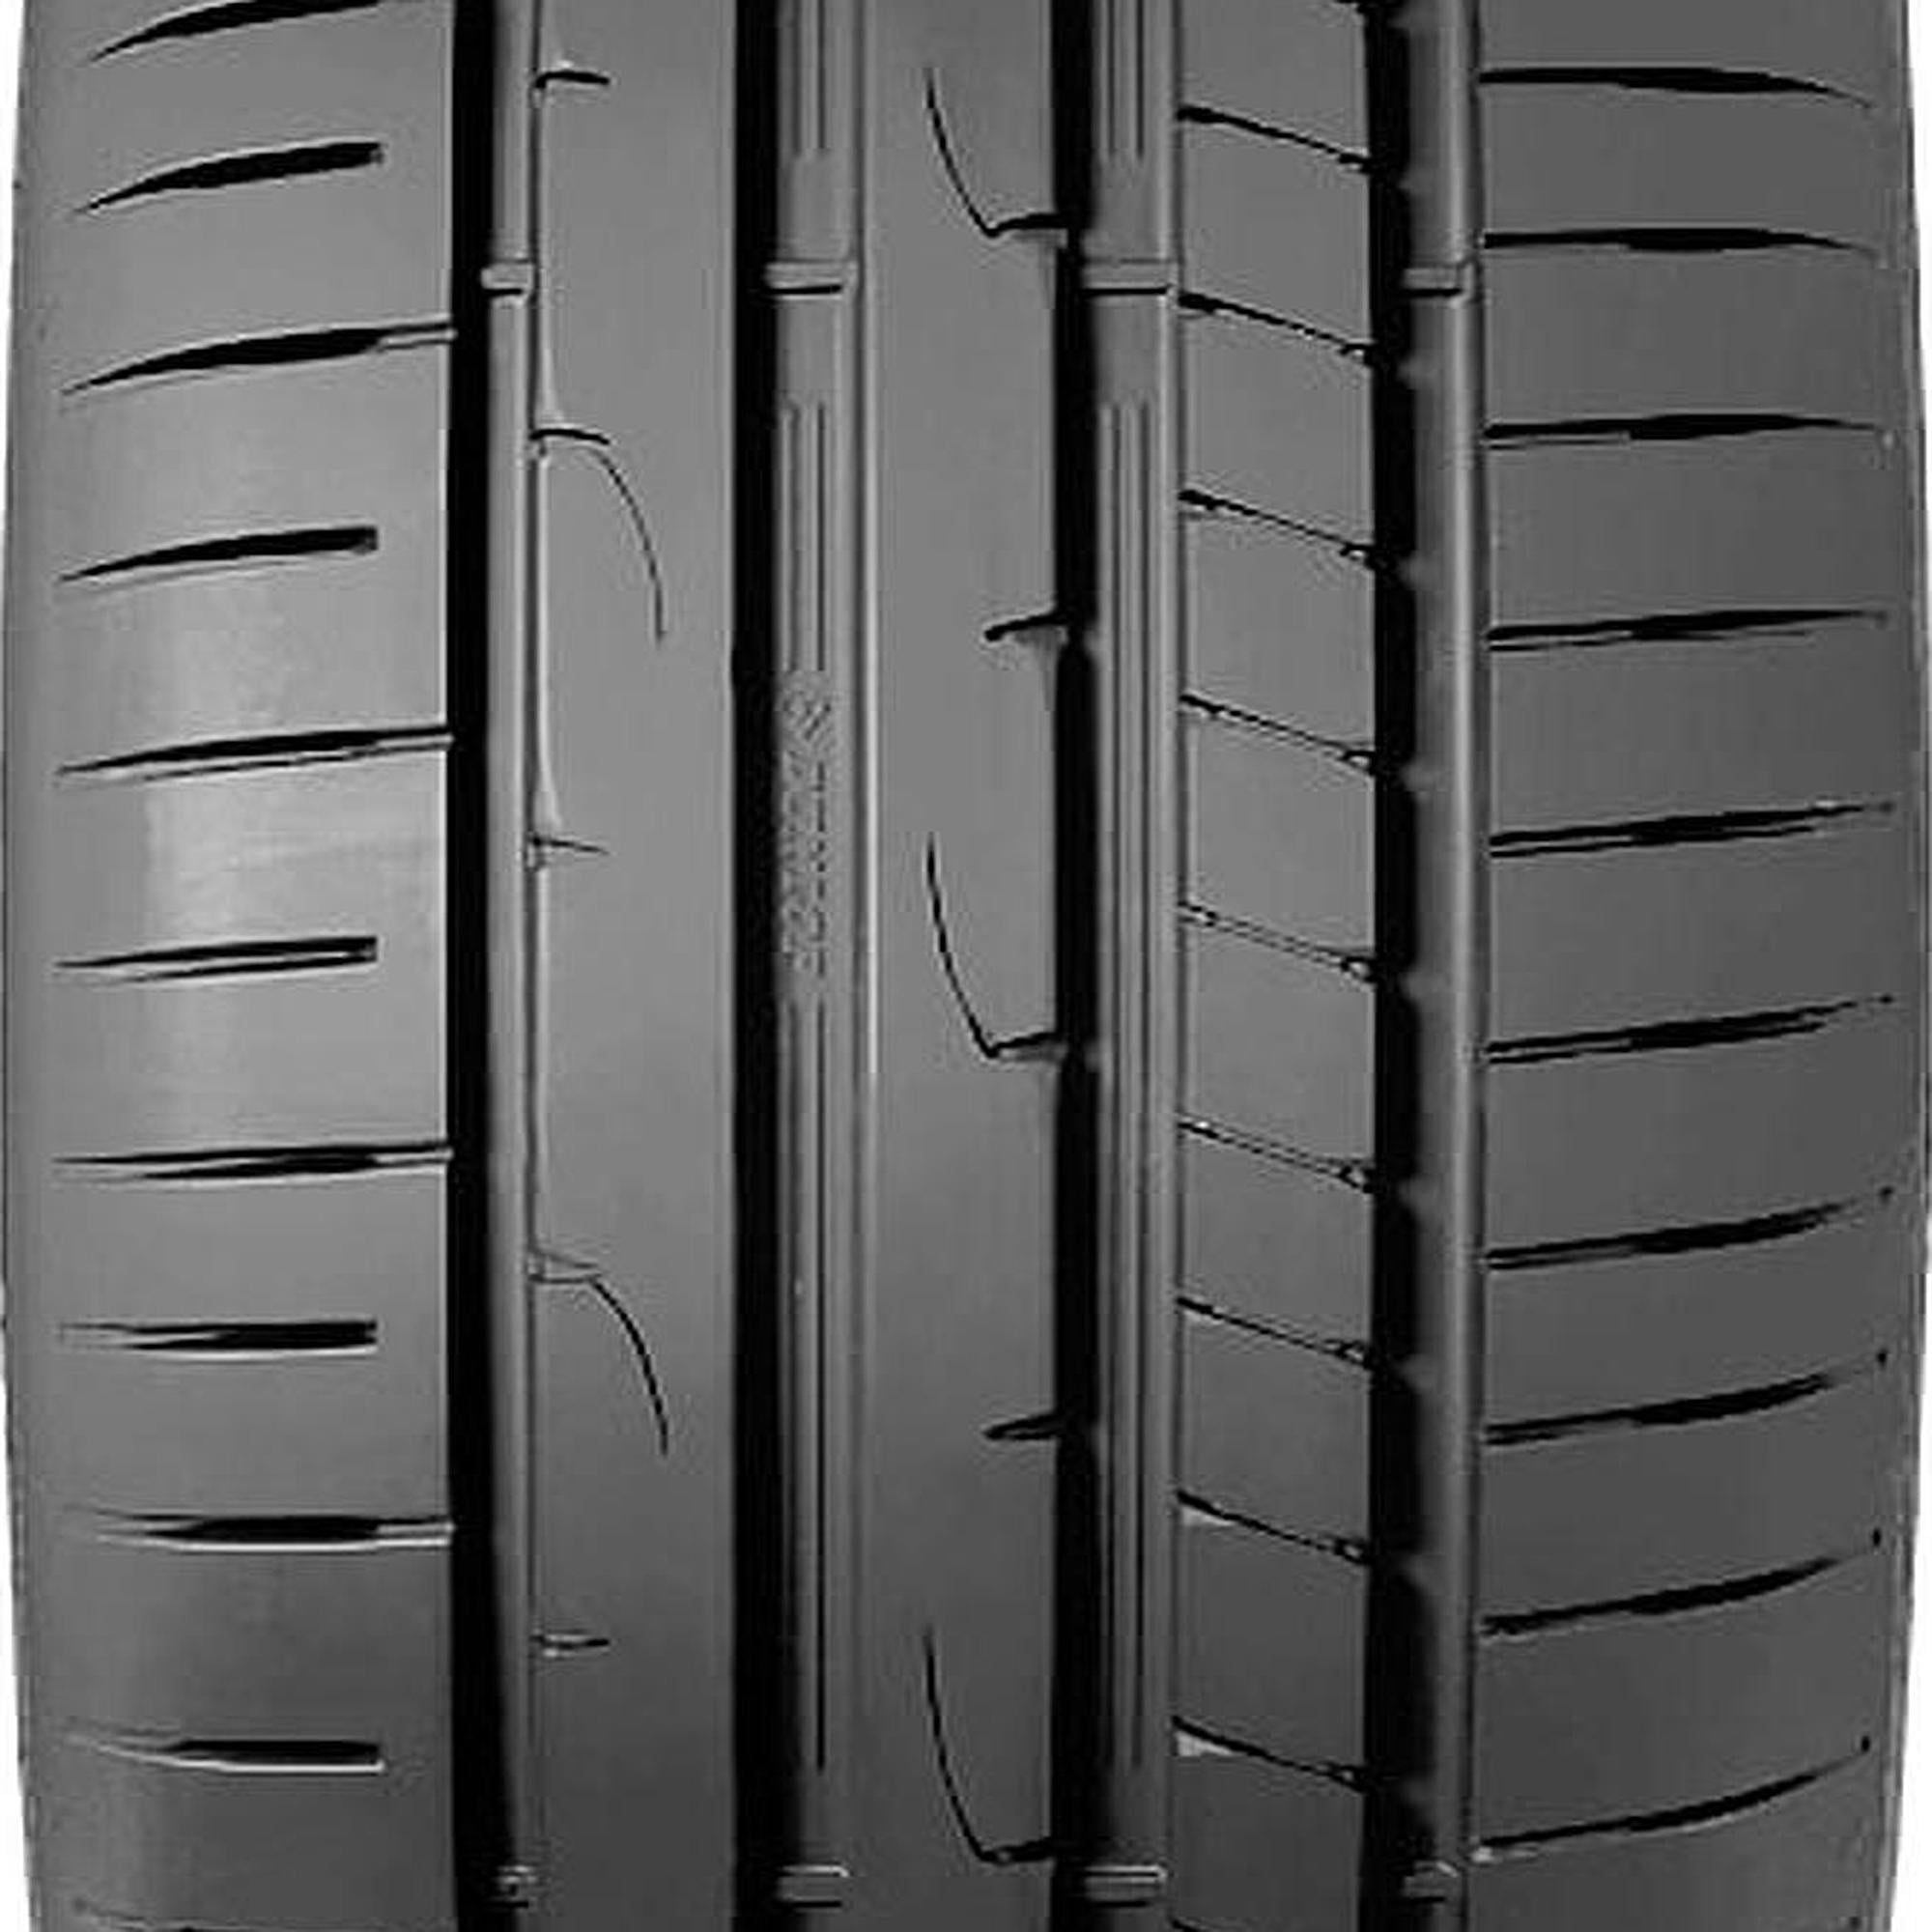 Dunlop Sport Maxx Rt2 255/35ZR18 94Y Performance Tire Fits: 2011 BMW 328i  Base, 2016-19 Cadillac ATS V